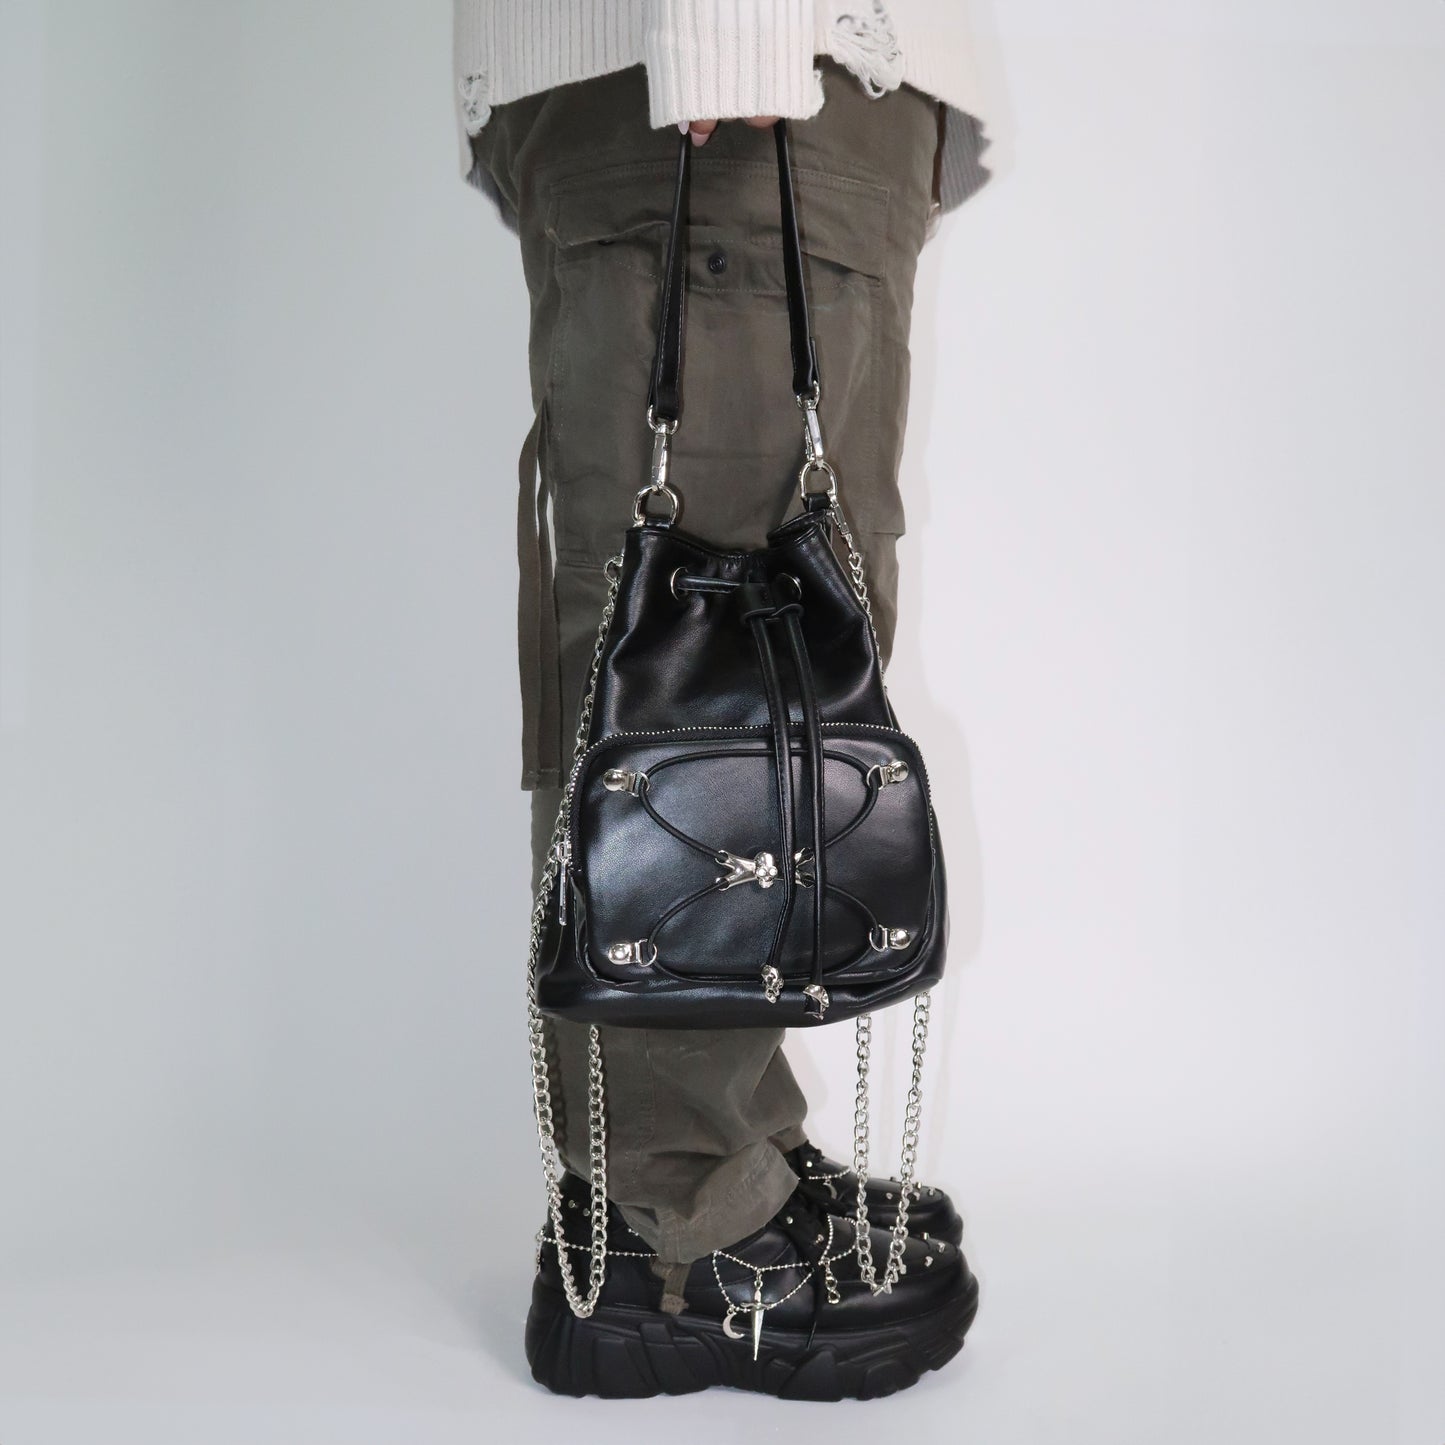 Rimo Black Mini Backpack - Accessories - KOI Footwear - Black - Model Side View